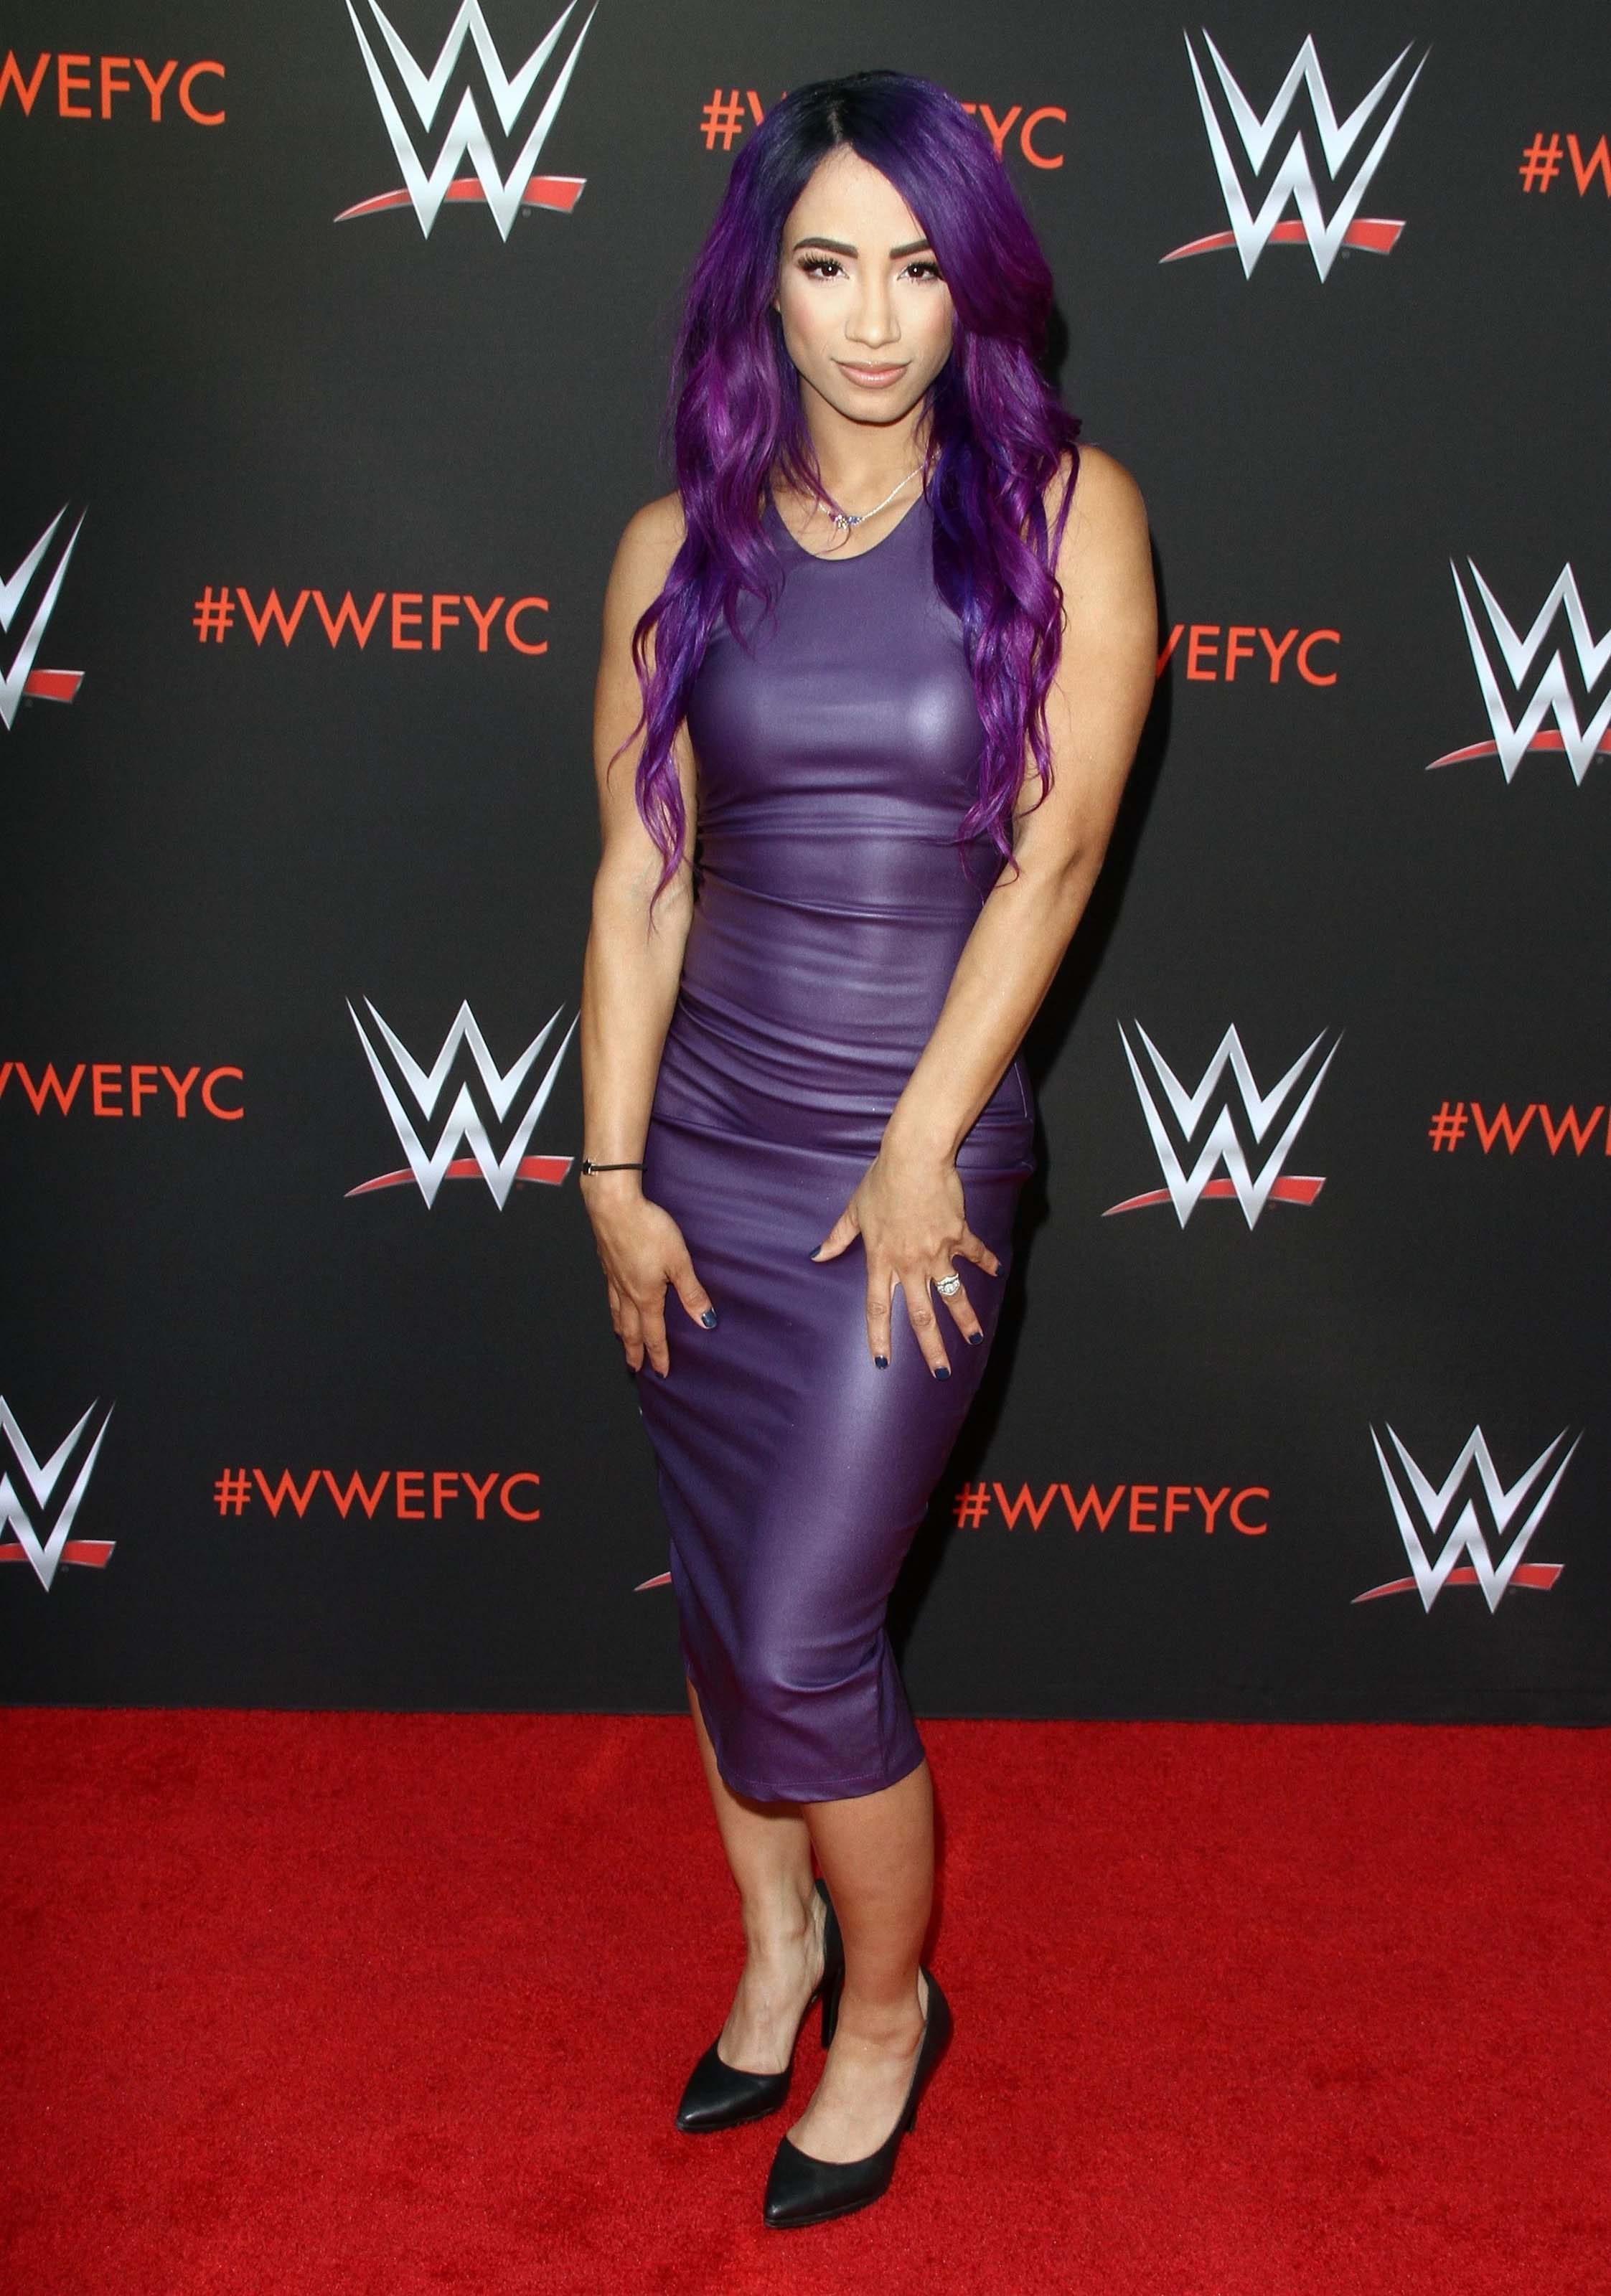 Sasha Banks attends WWE FYC Event